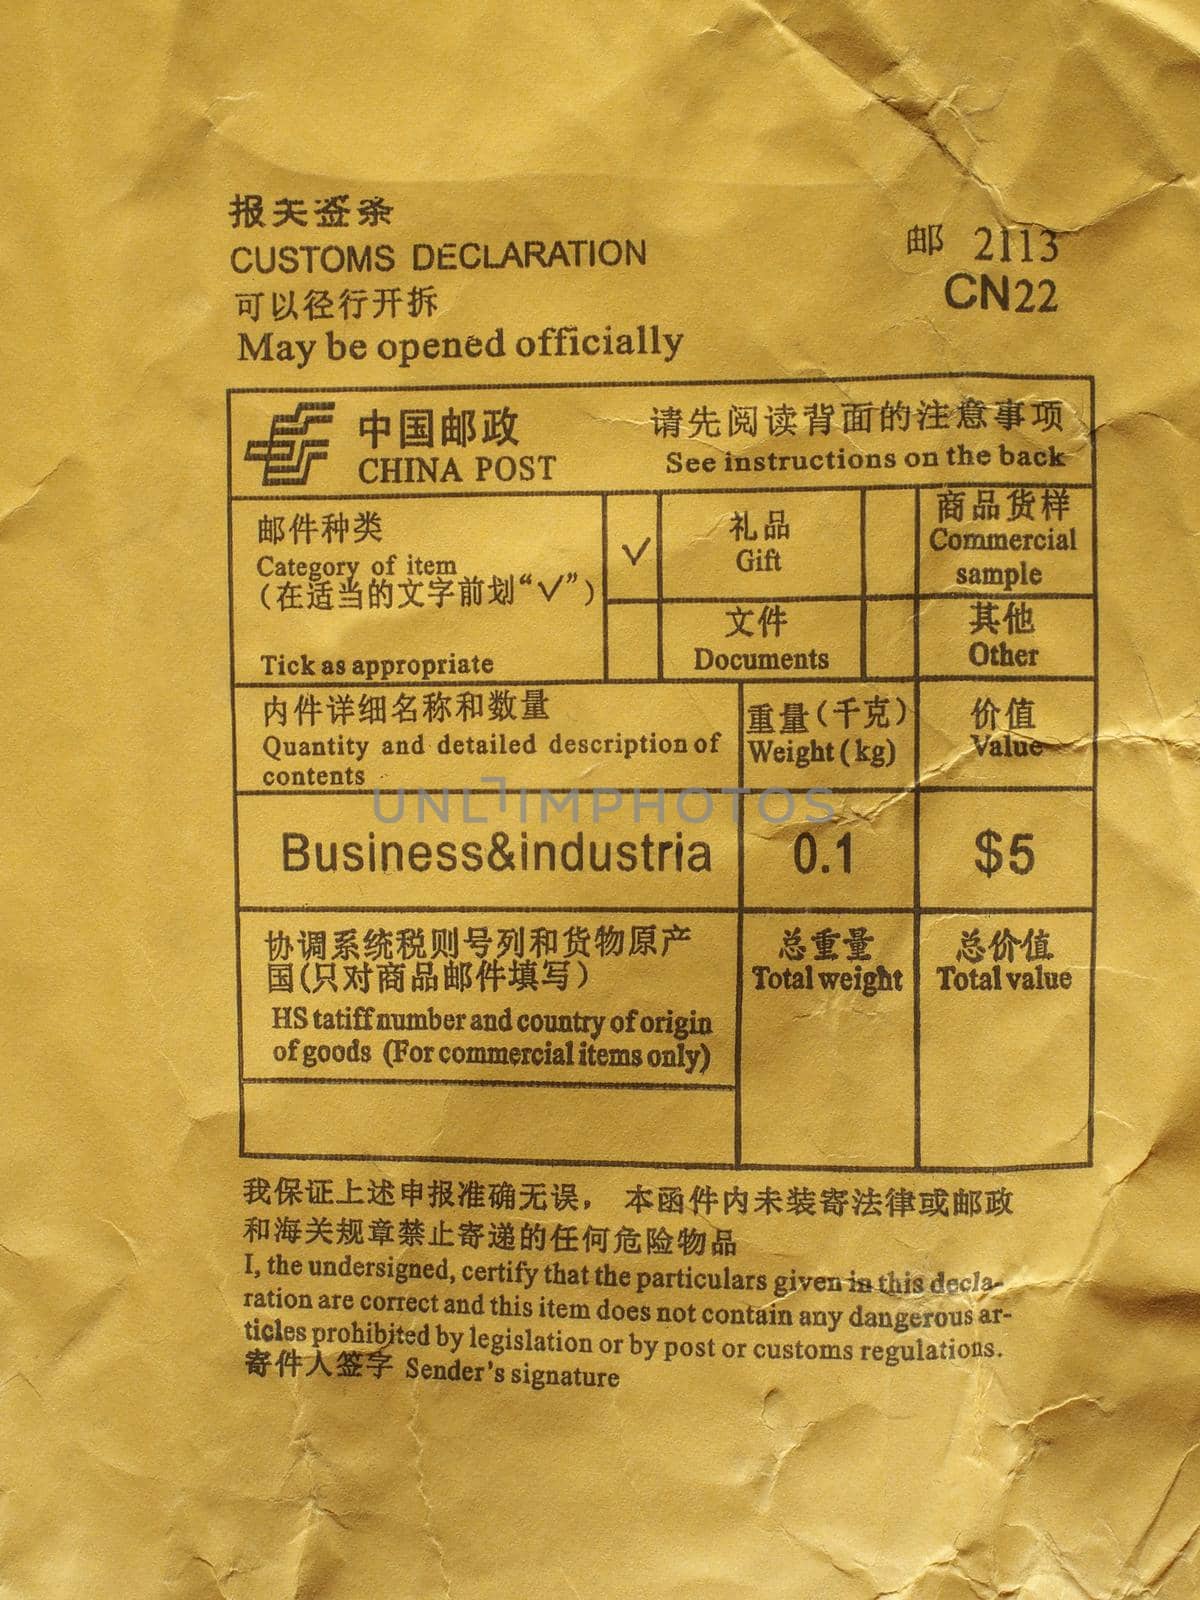 Chinese customs declaration by claudiodivizia